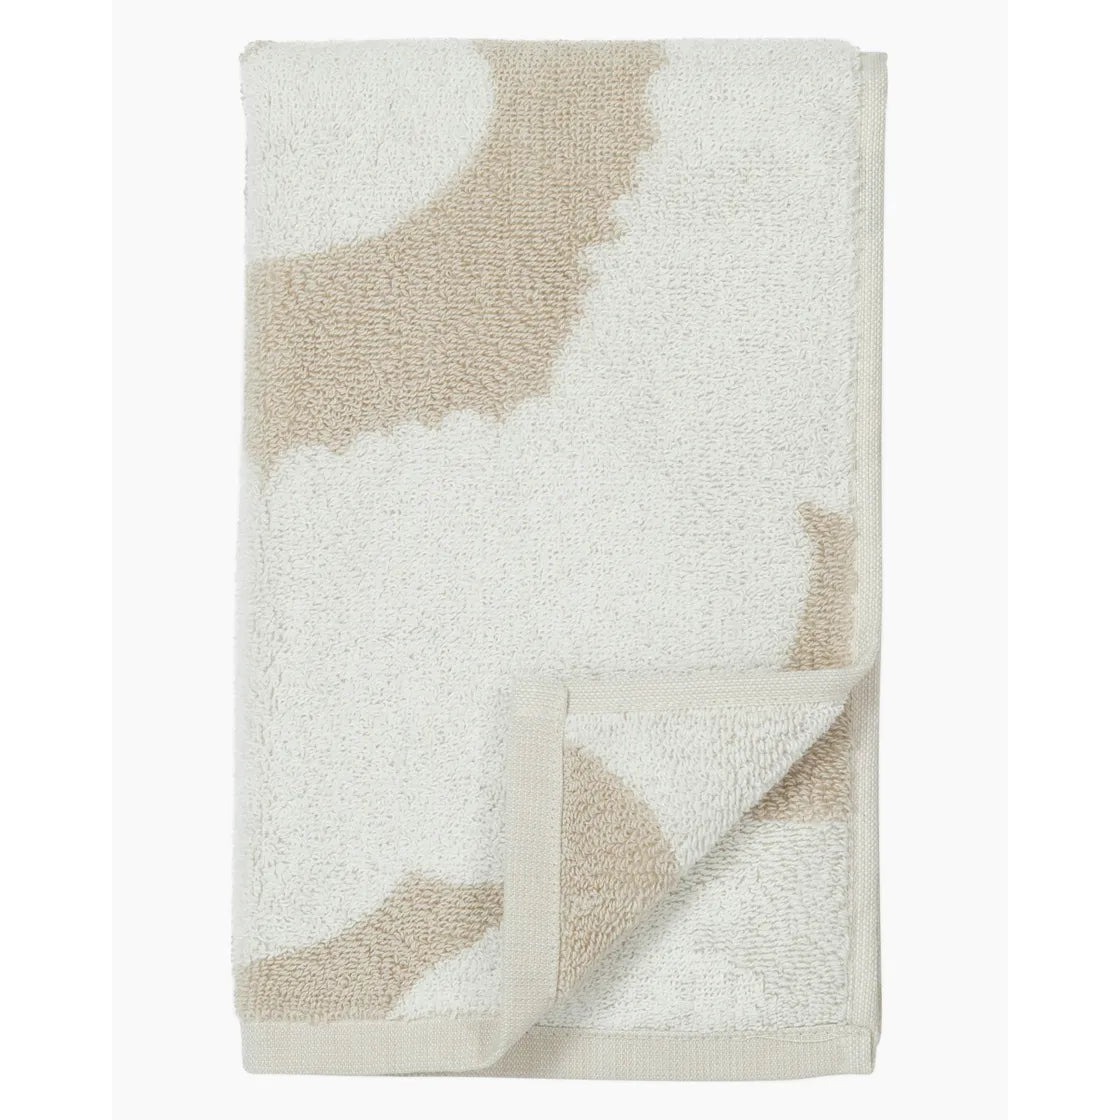 Unikko guest towel 30x50 cm beige, white 070232 810